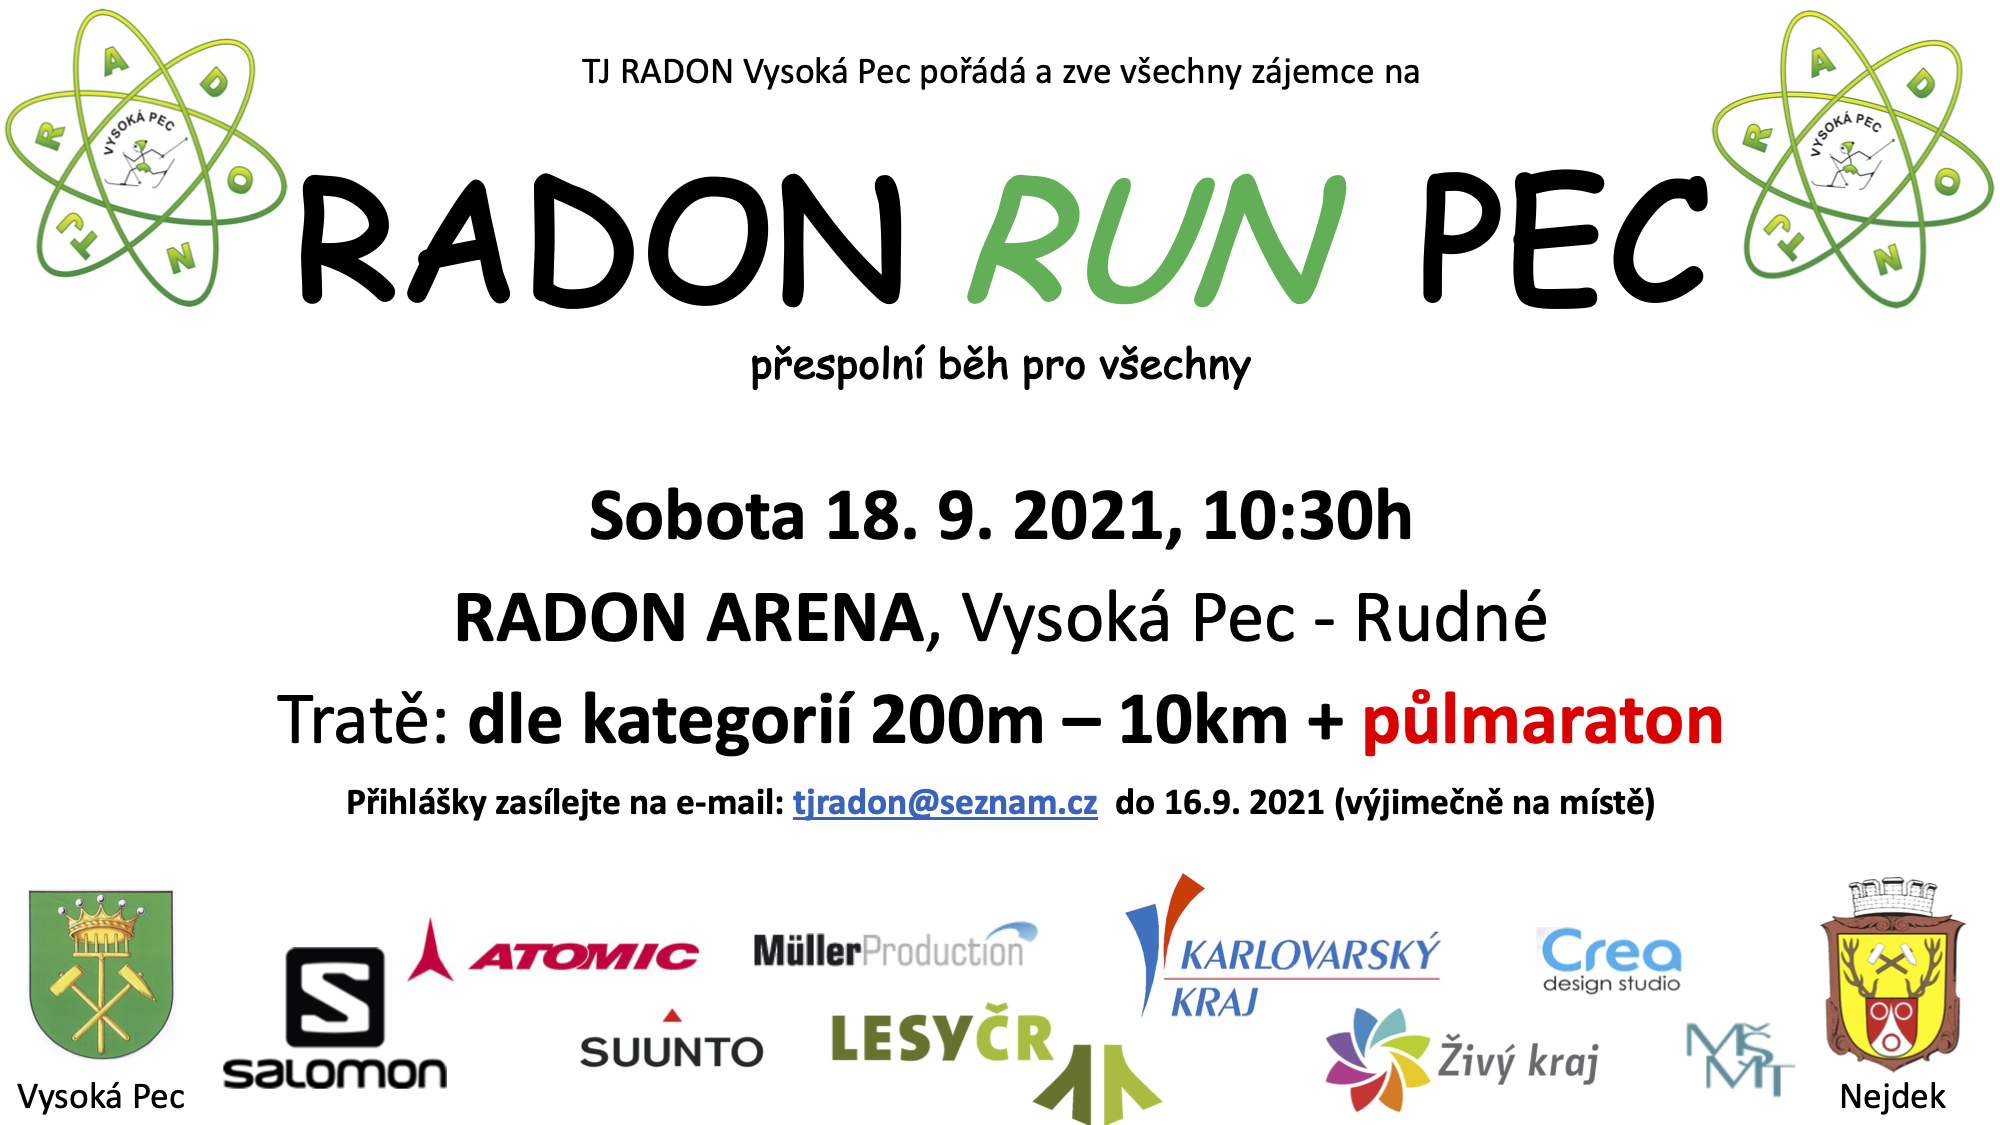 Radon Run Pec 2021